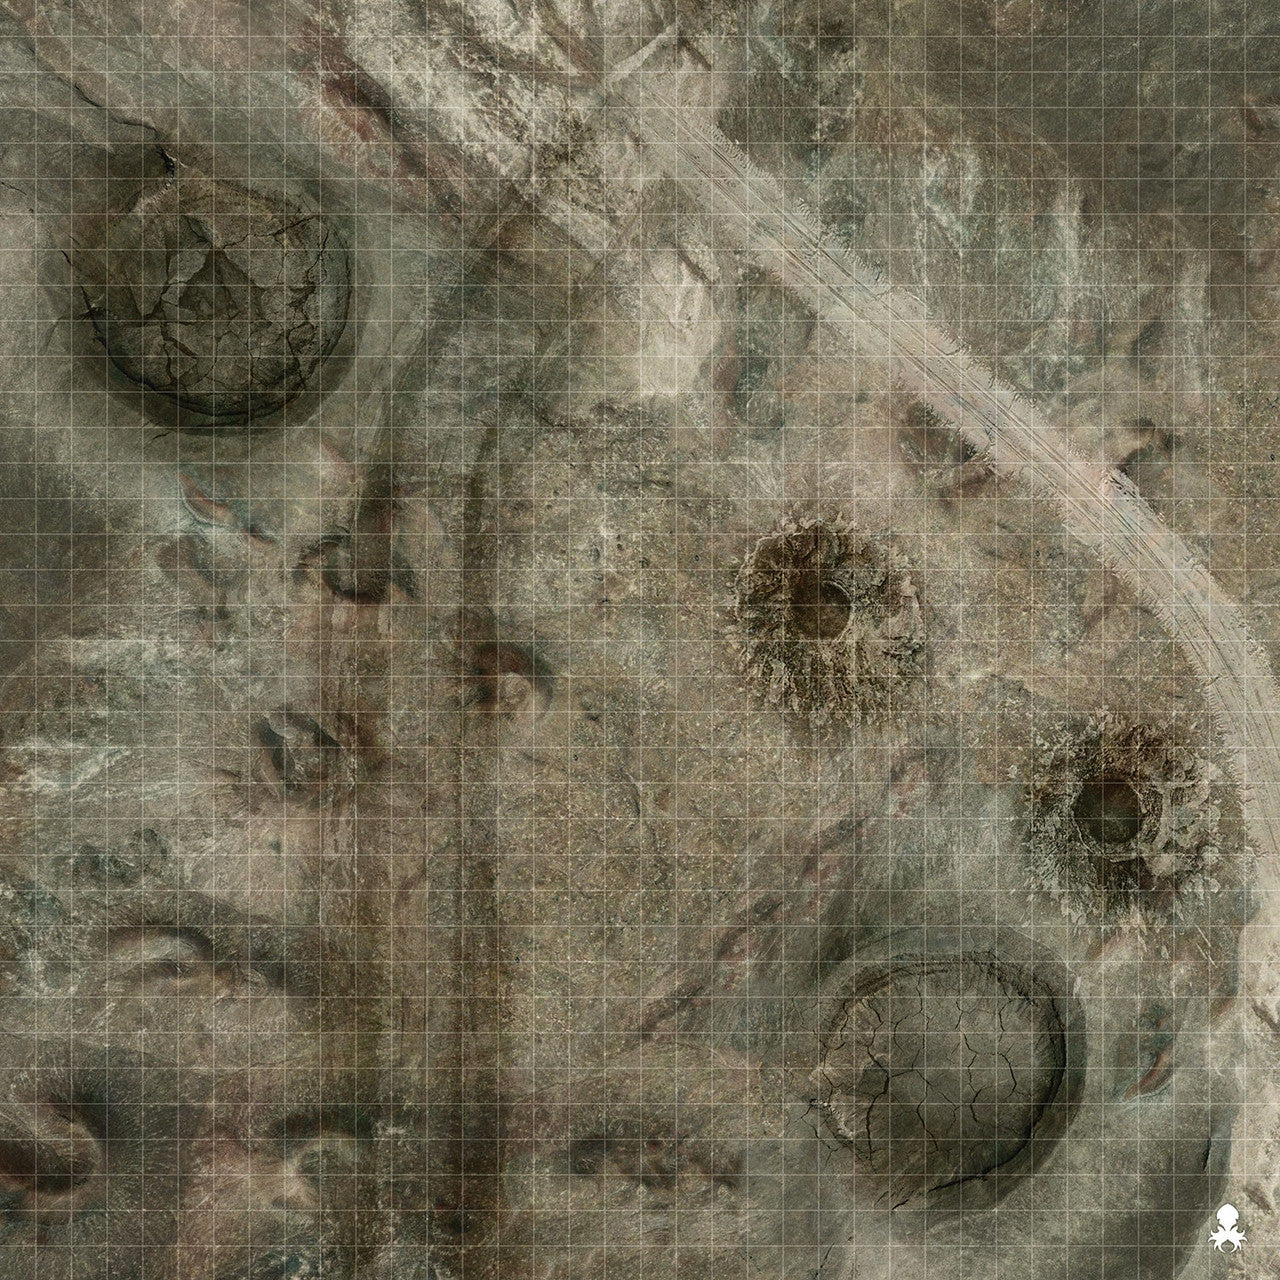 Kraken Dice RPG Encounter Map Quick Mat- Barren Wasteland 36"x36"